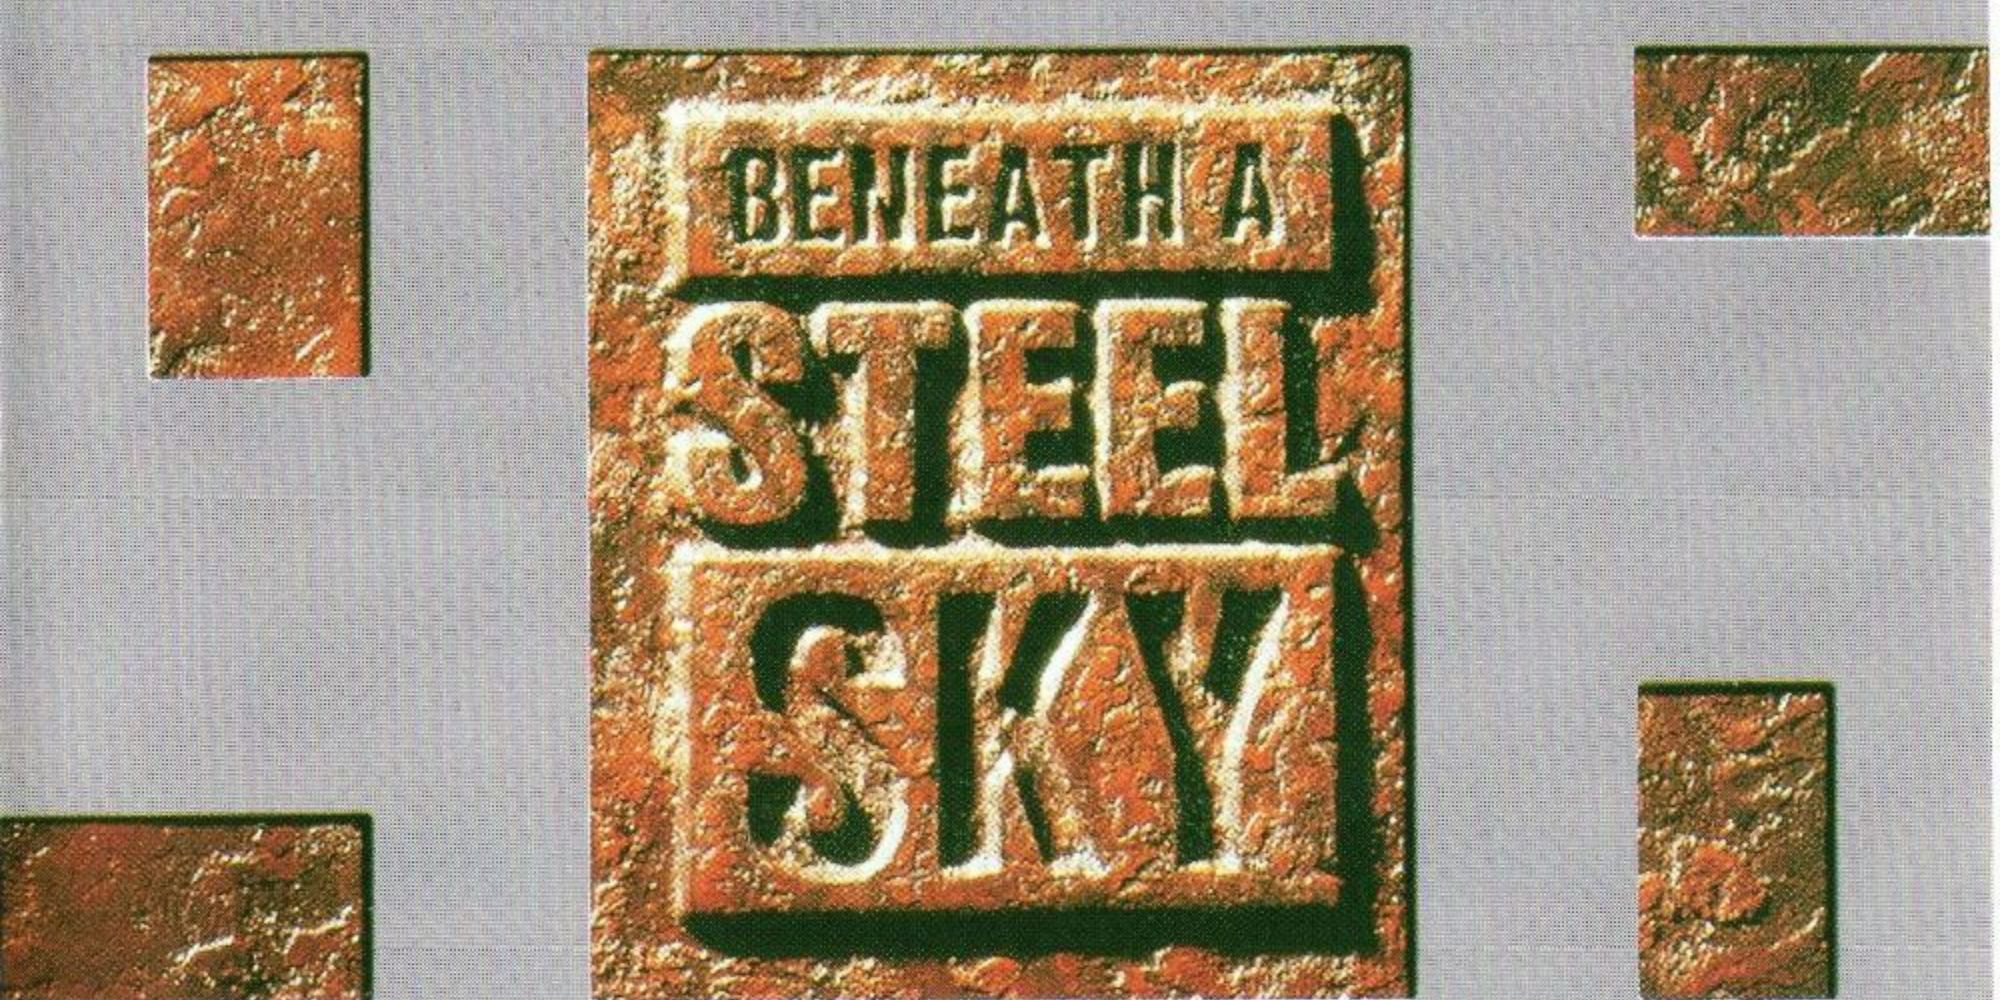 Beneath A Steel Sky cover image